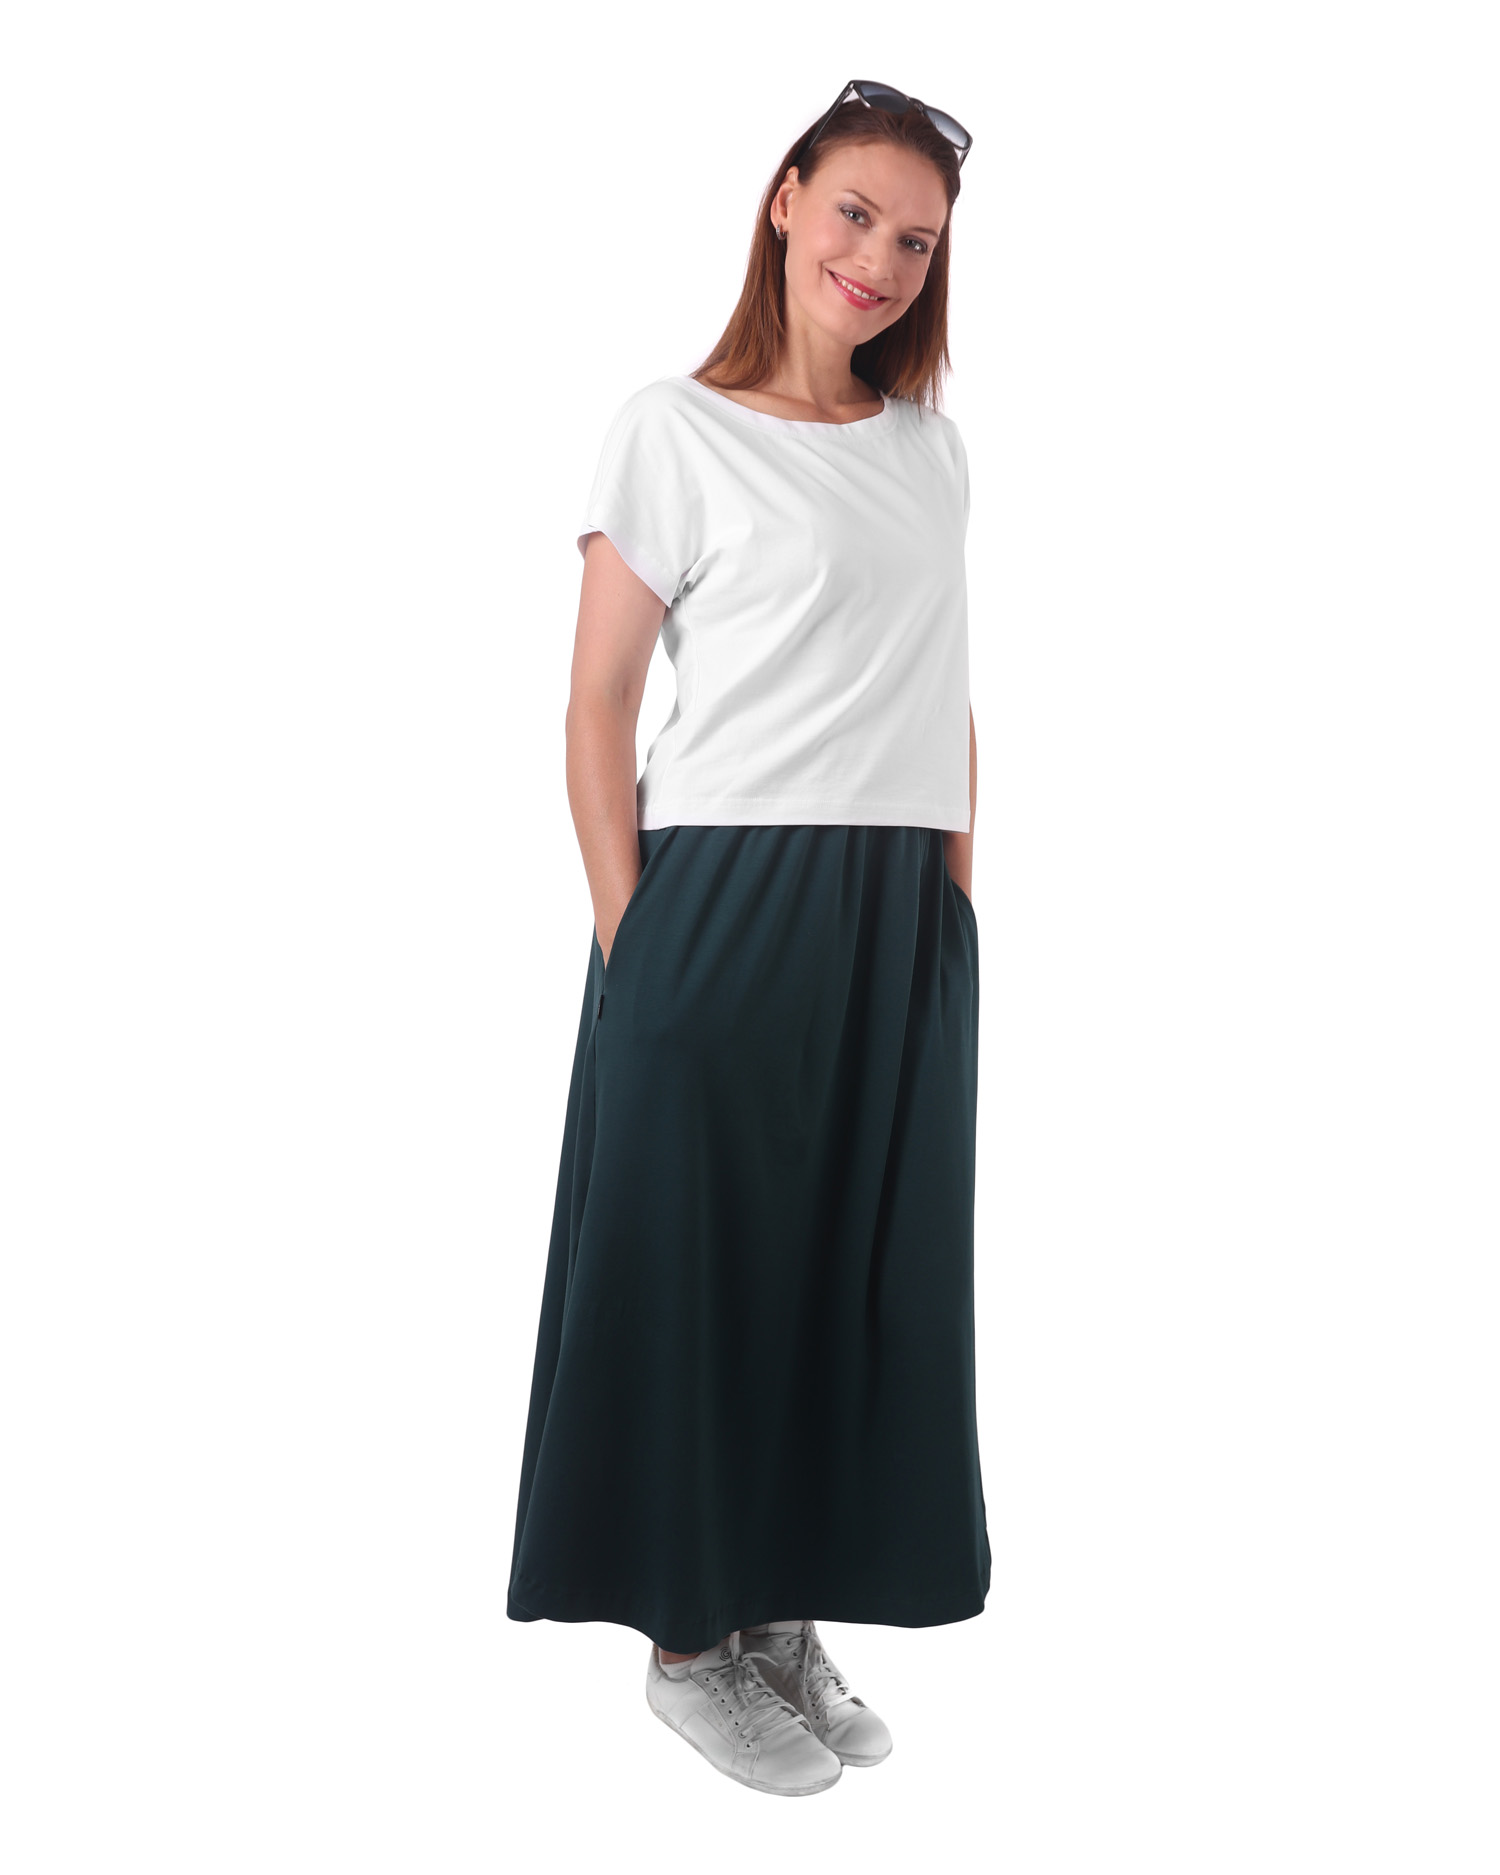 Long skirt with pockets Linda, dark green